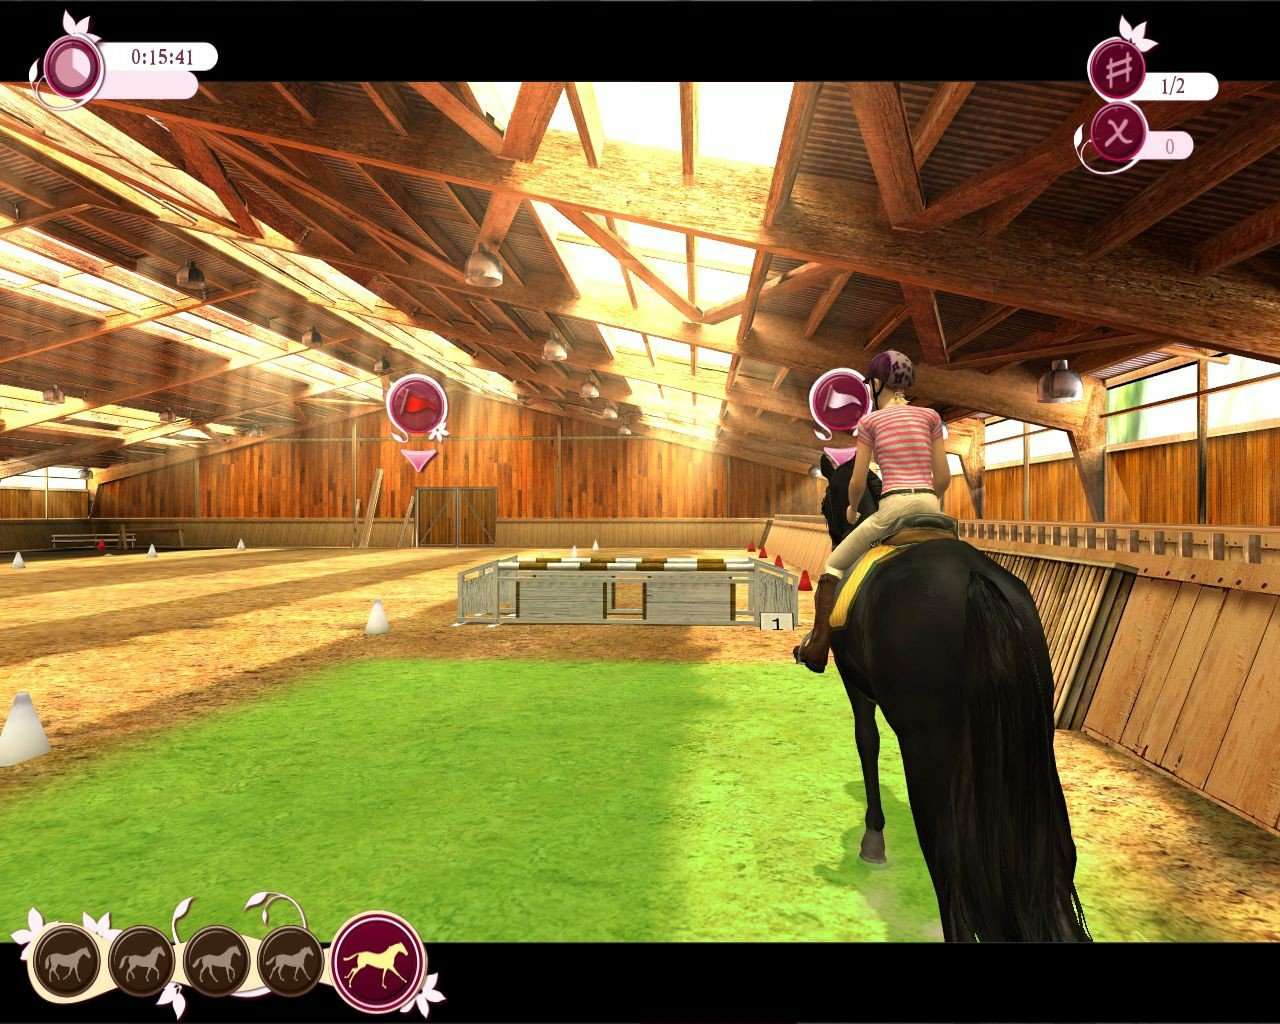 Horse life игра. Ellen Whitaker's Horse Life игра. Ellen Whitaker's Horse Life (Horse Life 2). Horse Eventing игра.